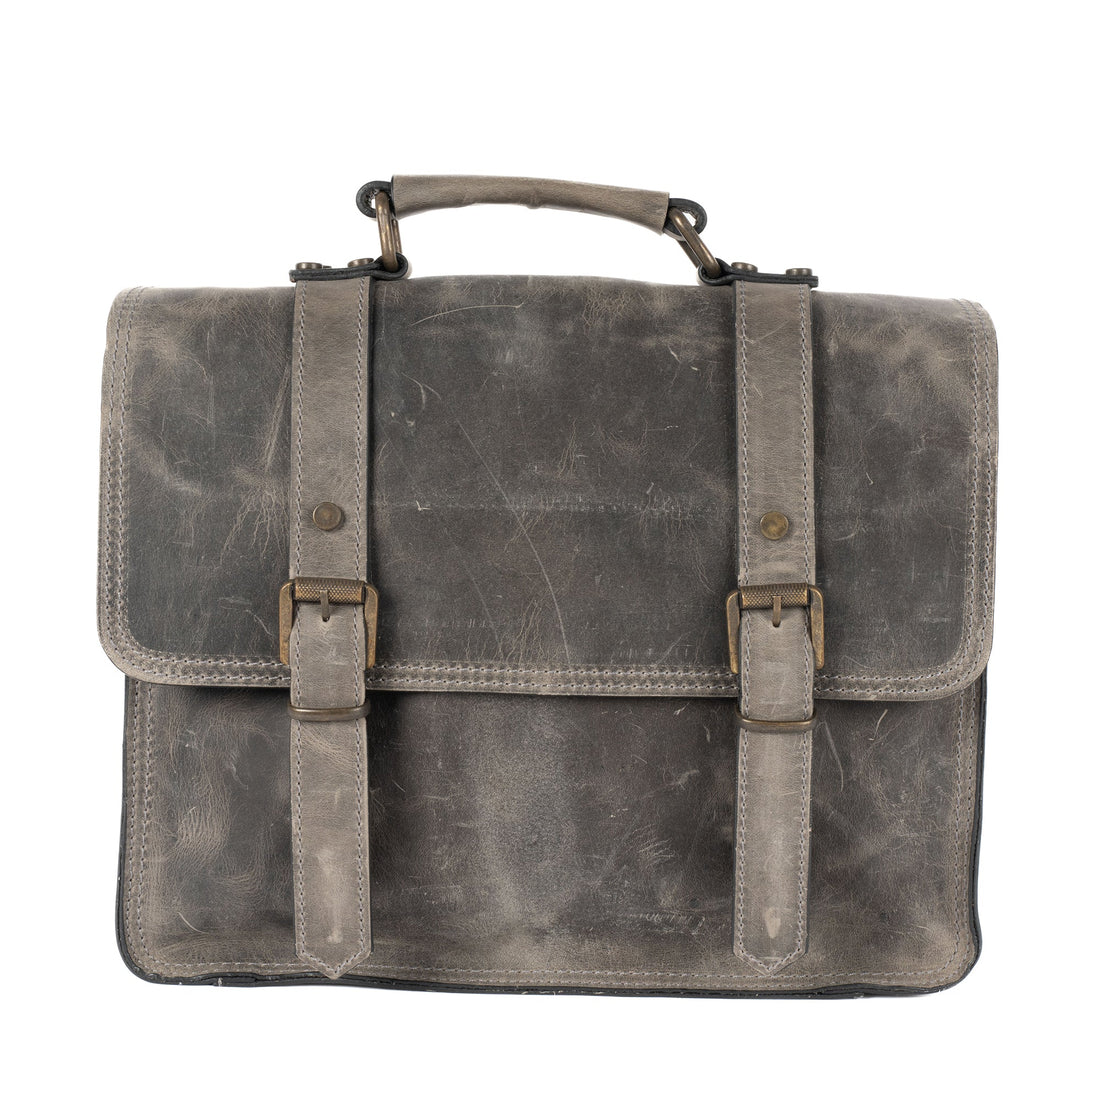 Xantus Leather Messenger Bag - Gray - Bags Zengoda Shop online from Artisan Brands